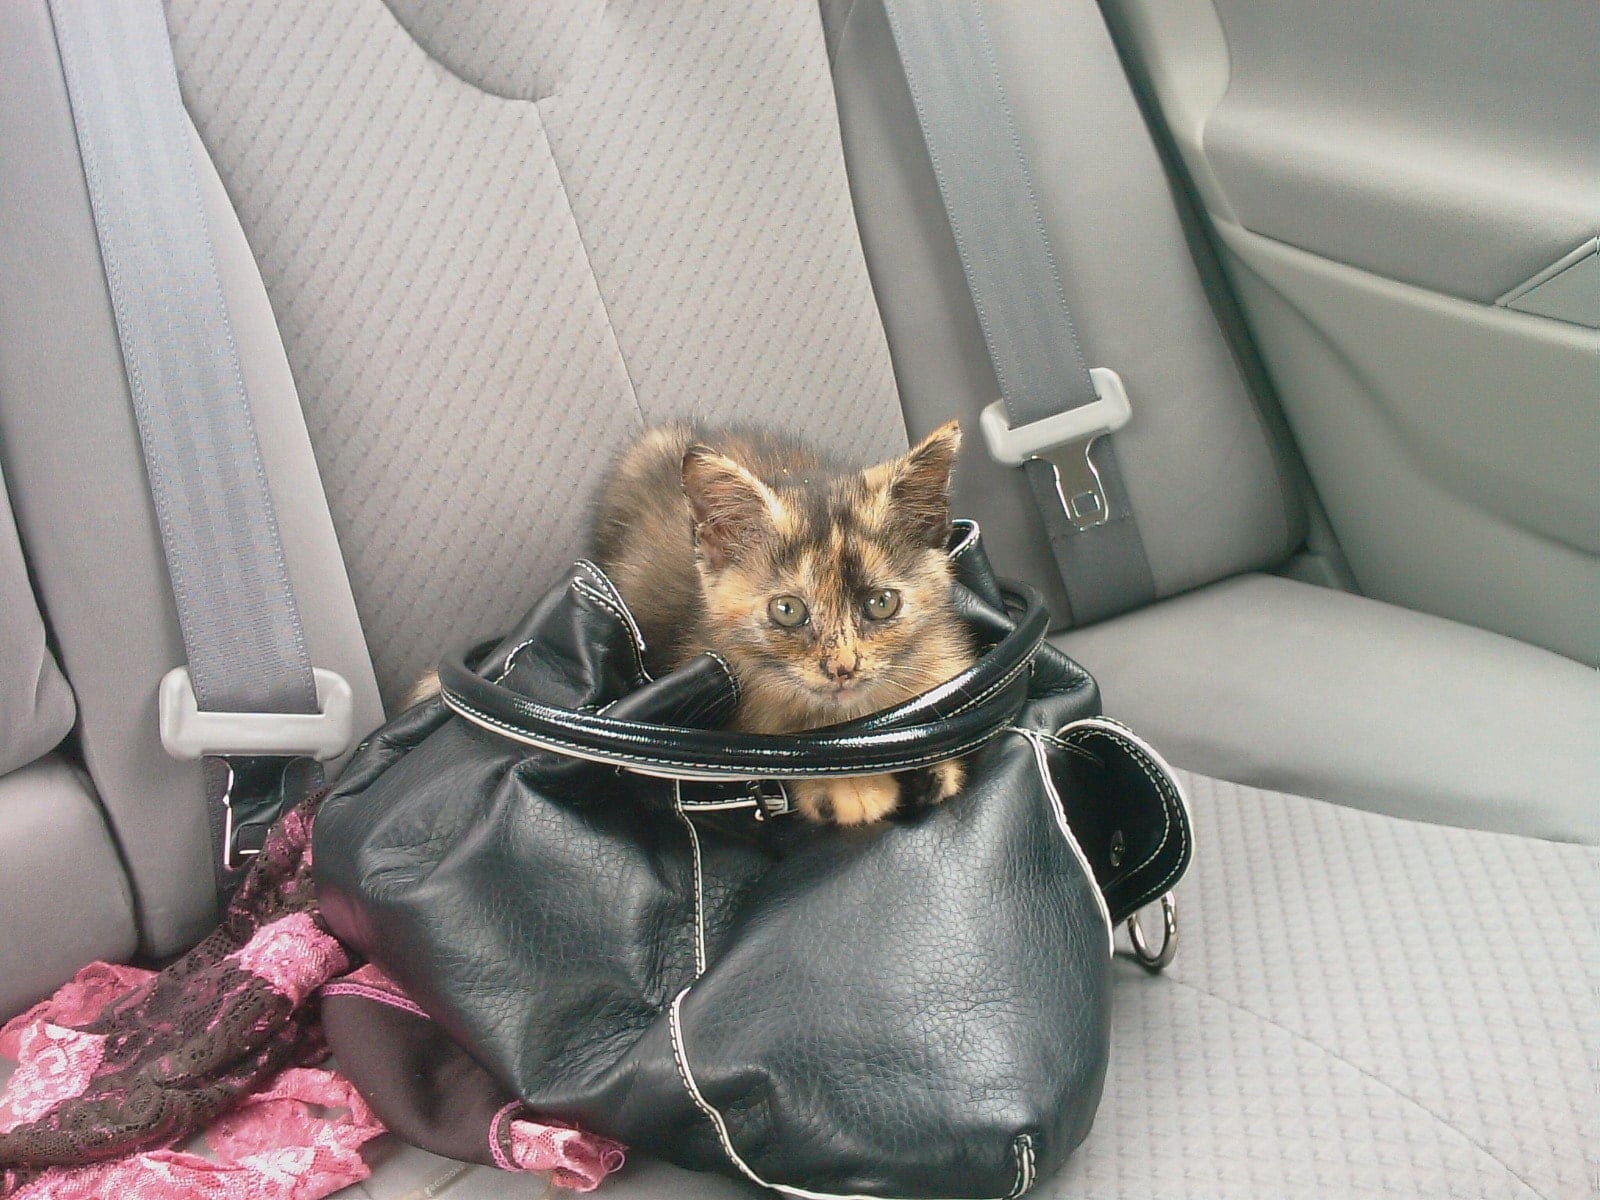 Leela in a purse